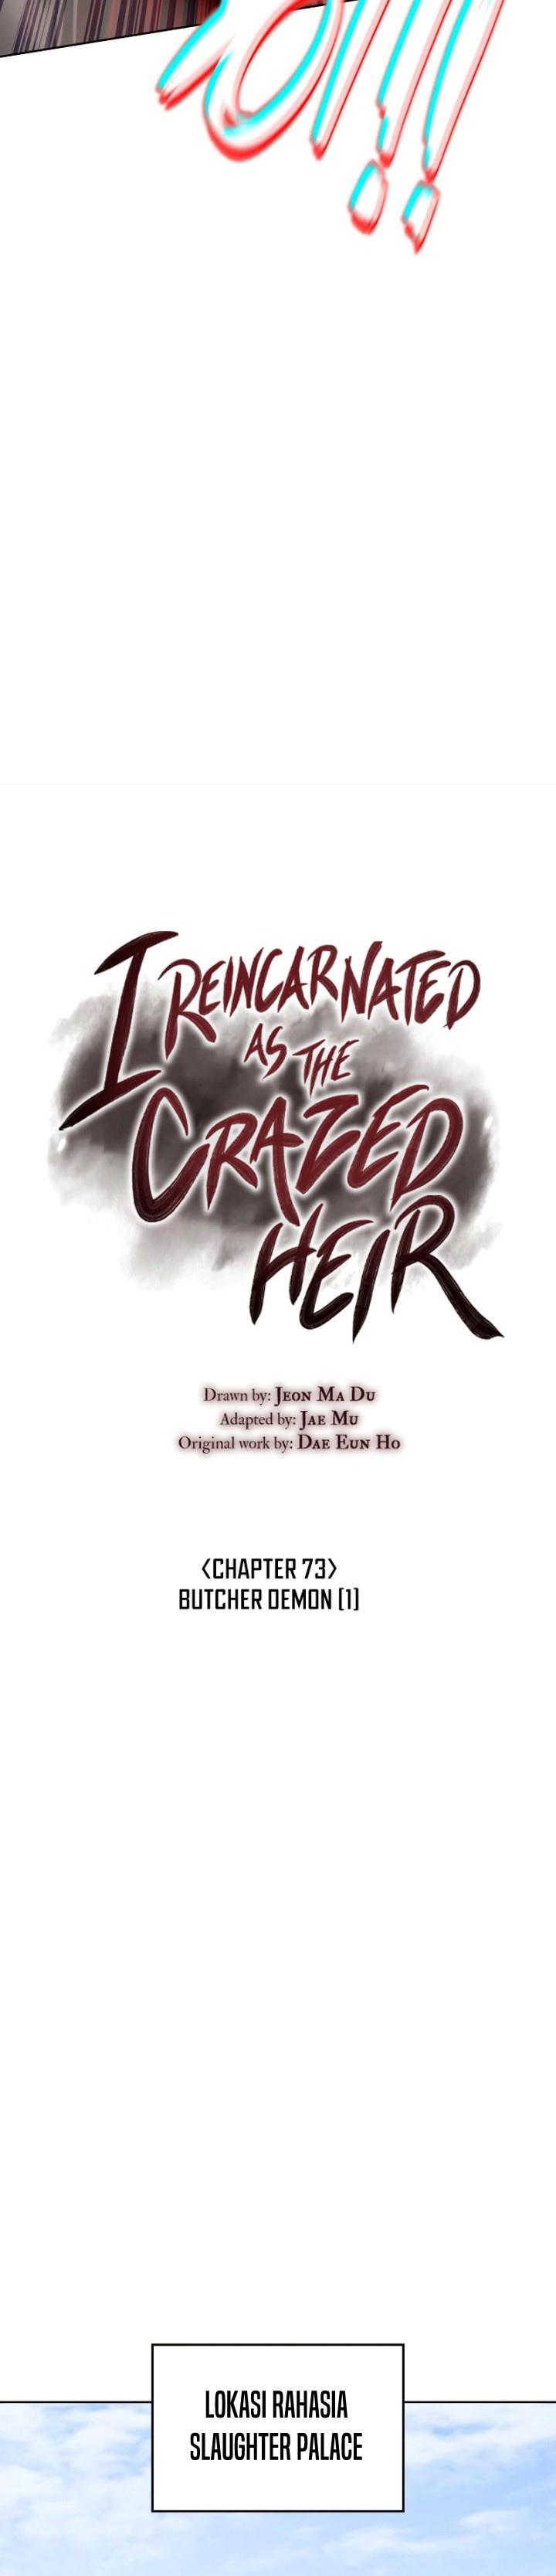 I Reincarnated As The Crazed Heir Chapter 73